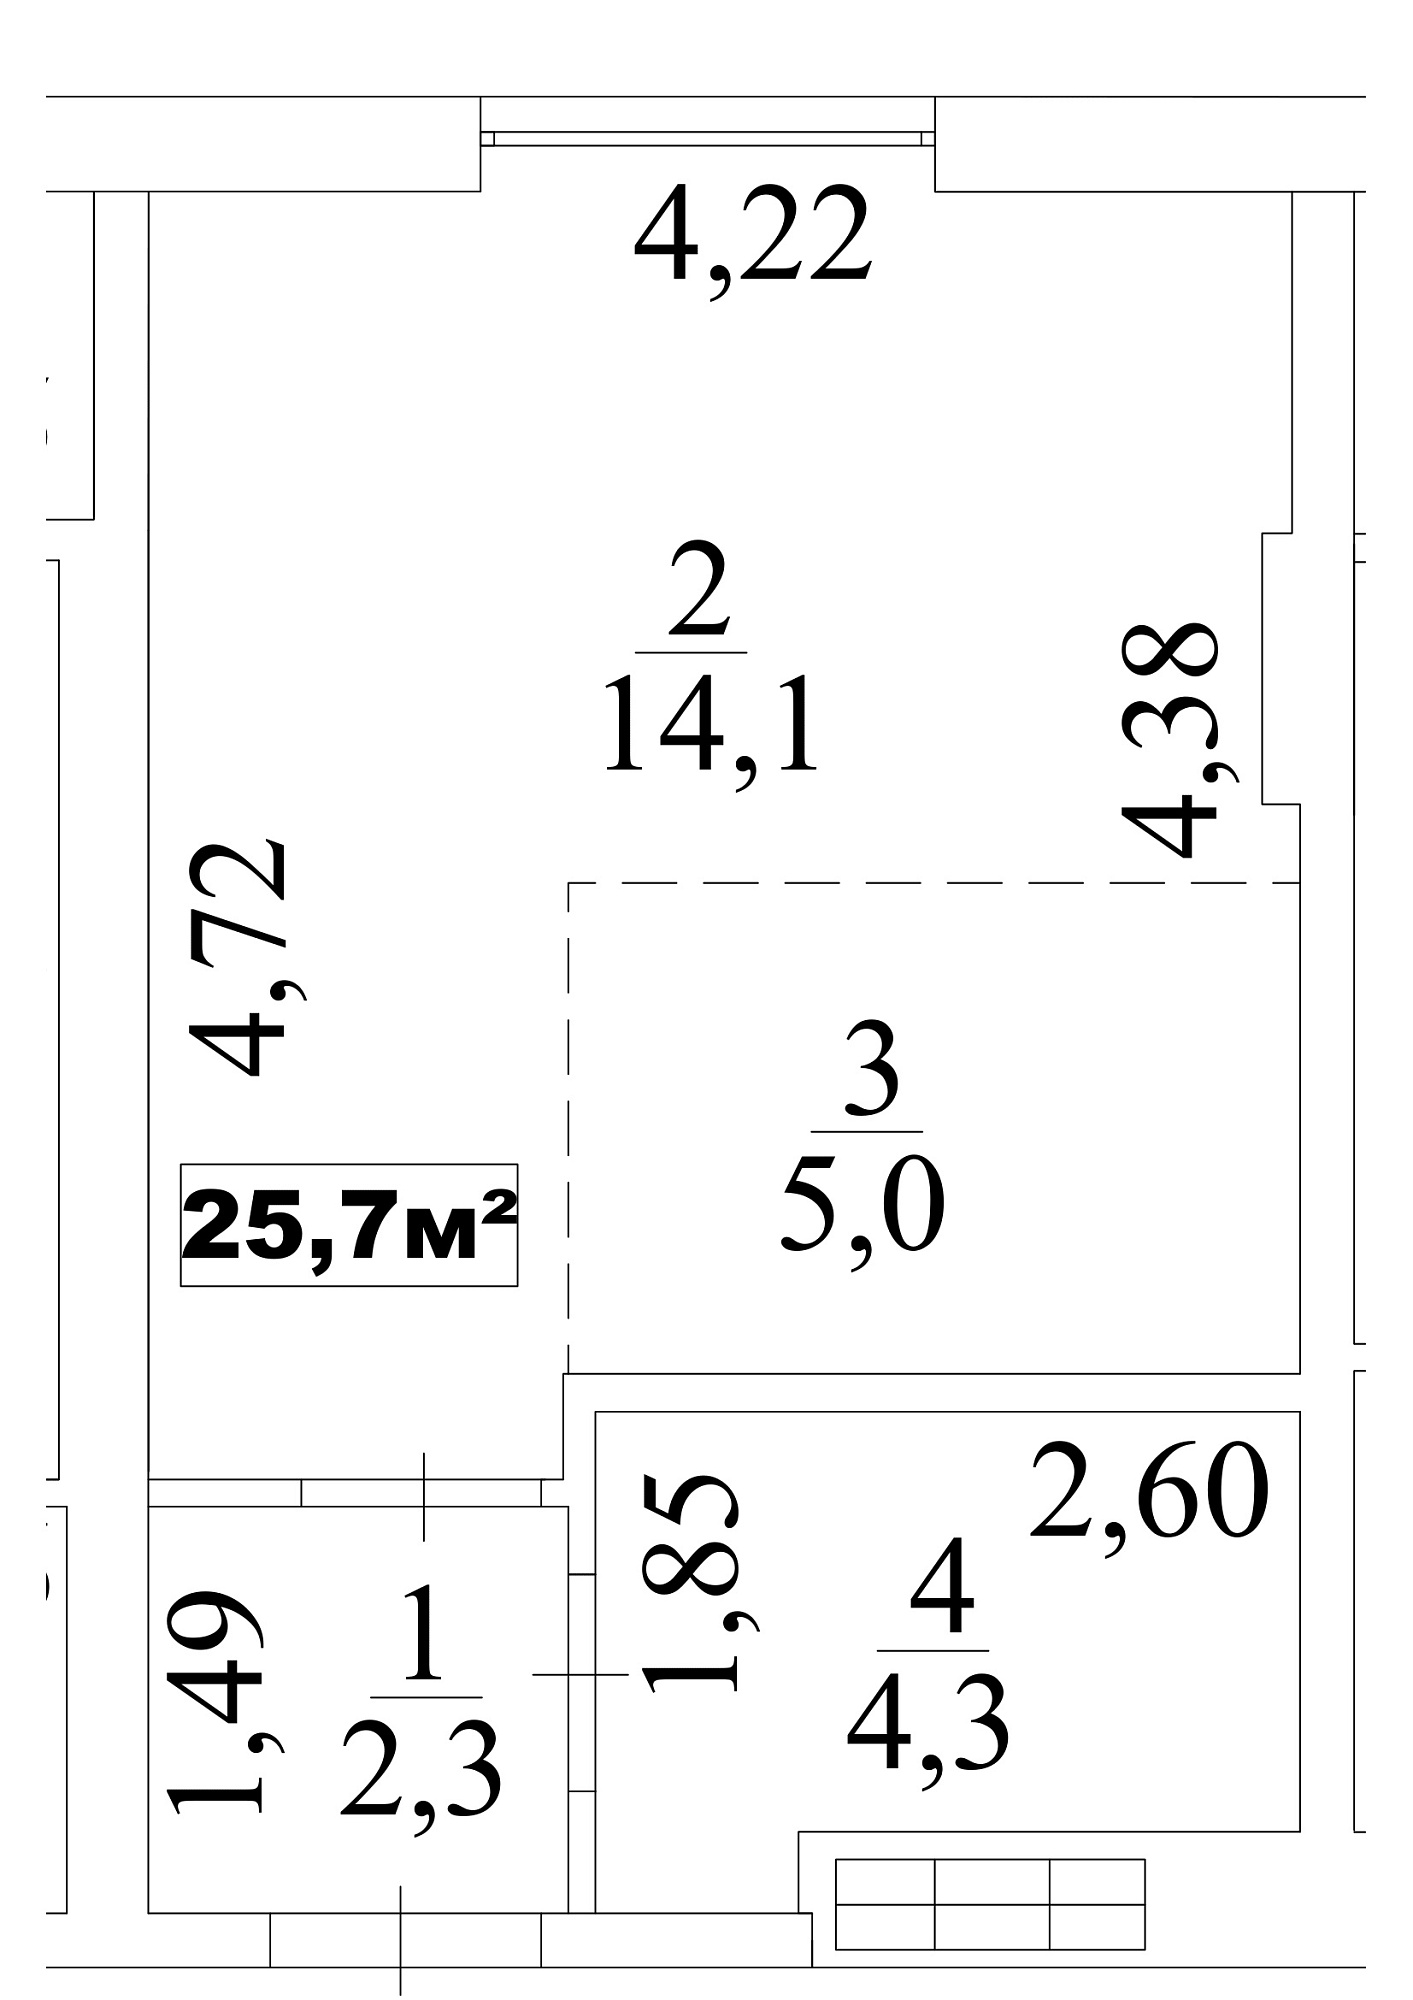 Planning Smart flats area 25.7m2, AB-10-06/0048в.